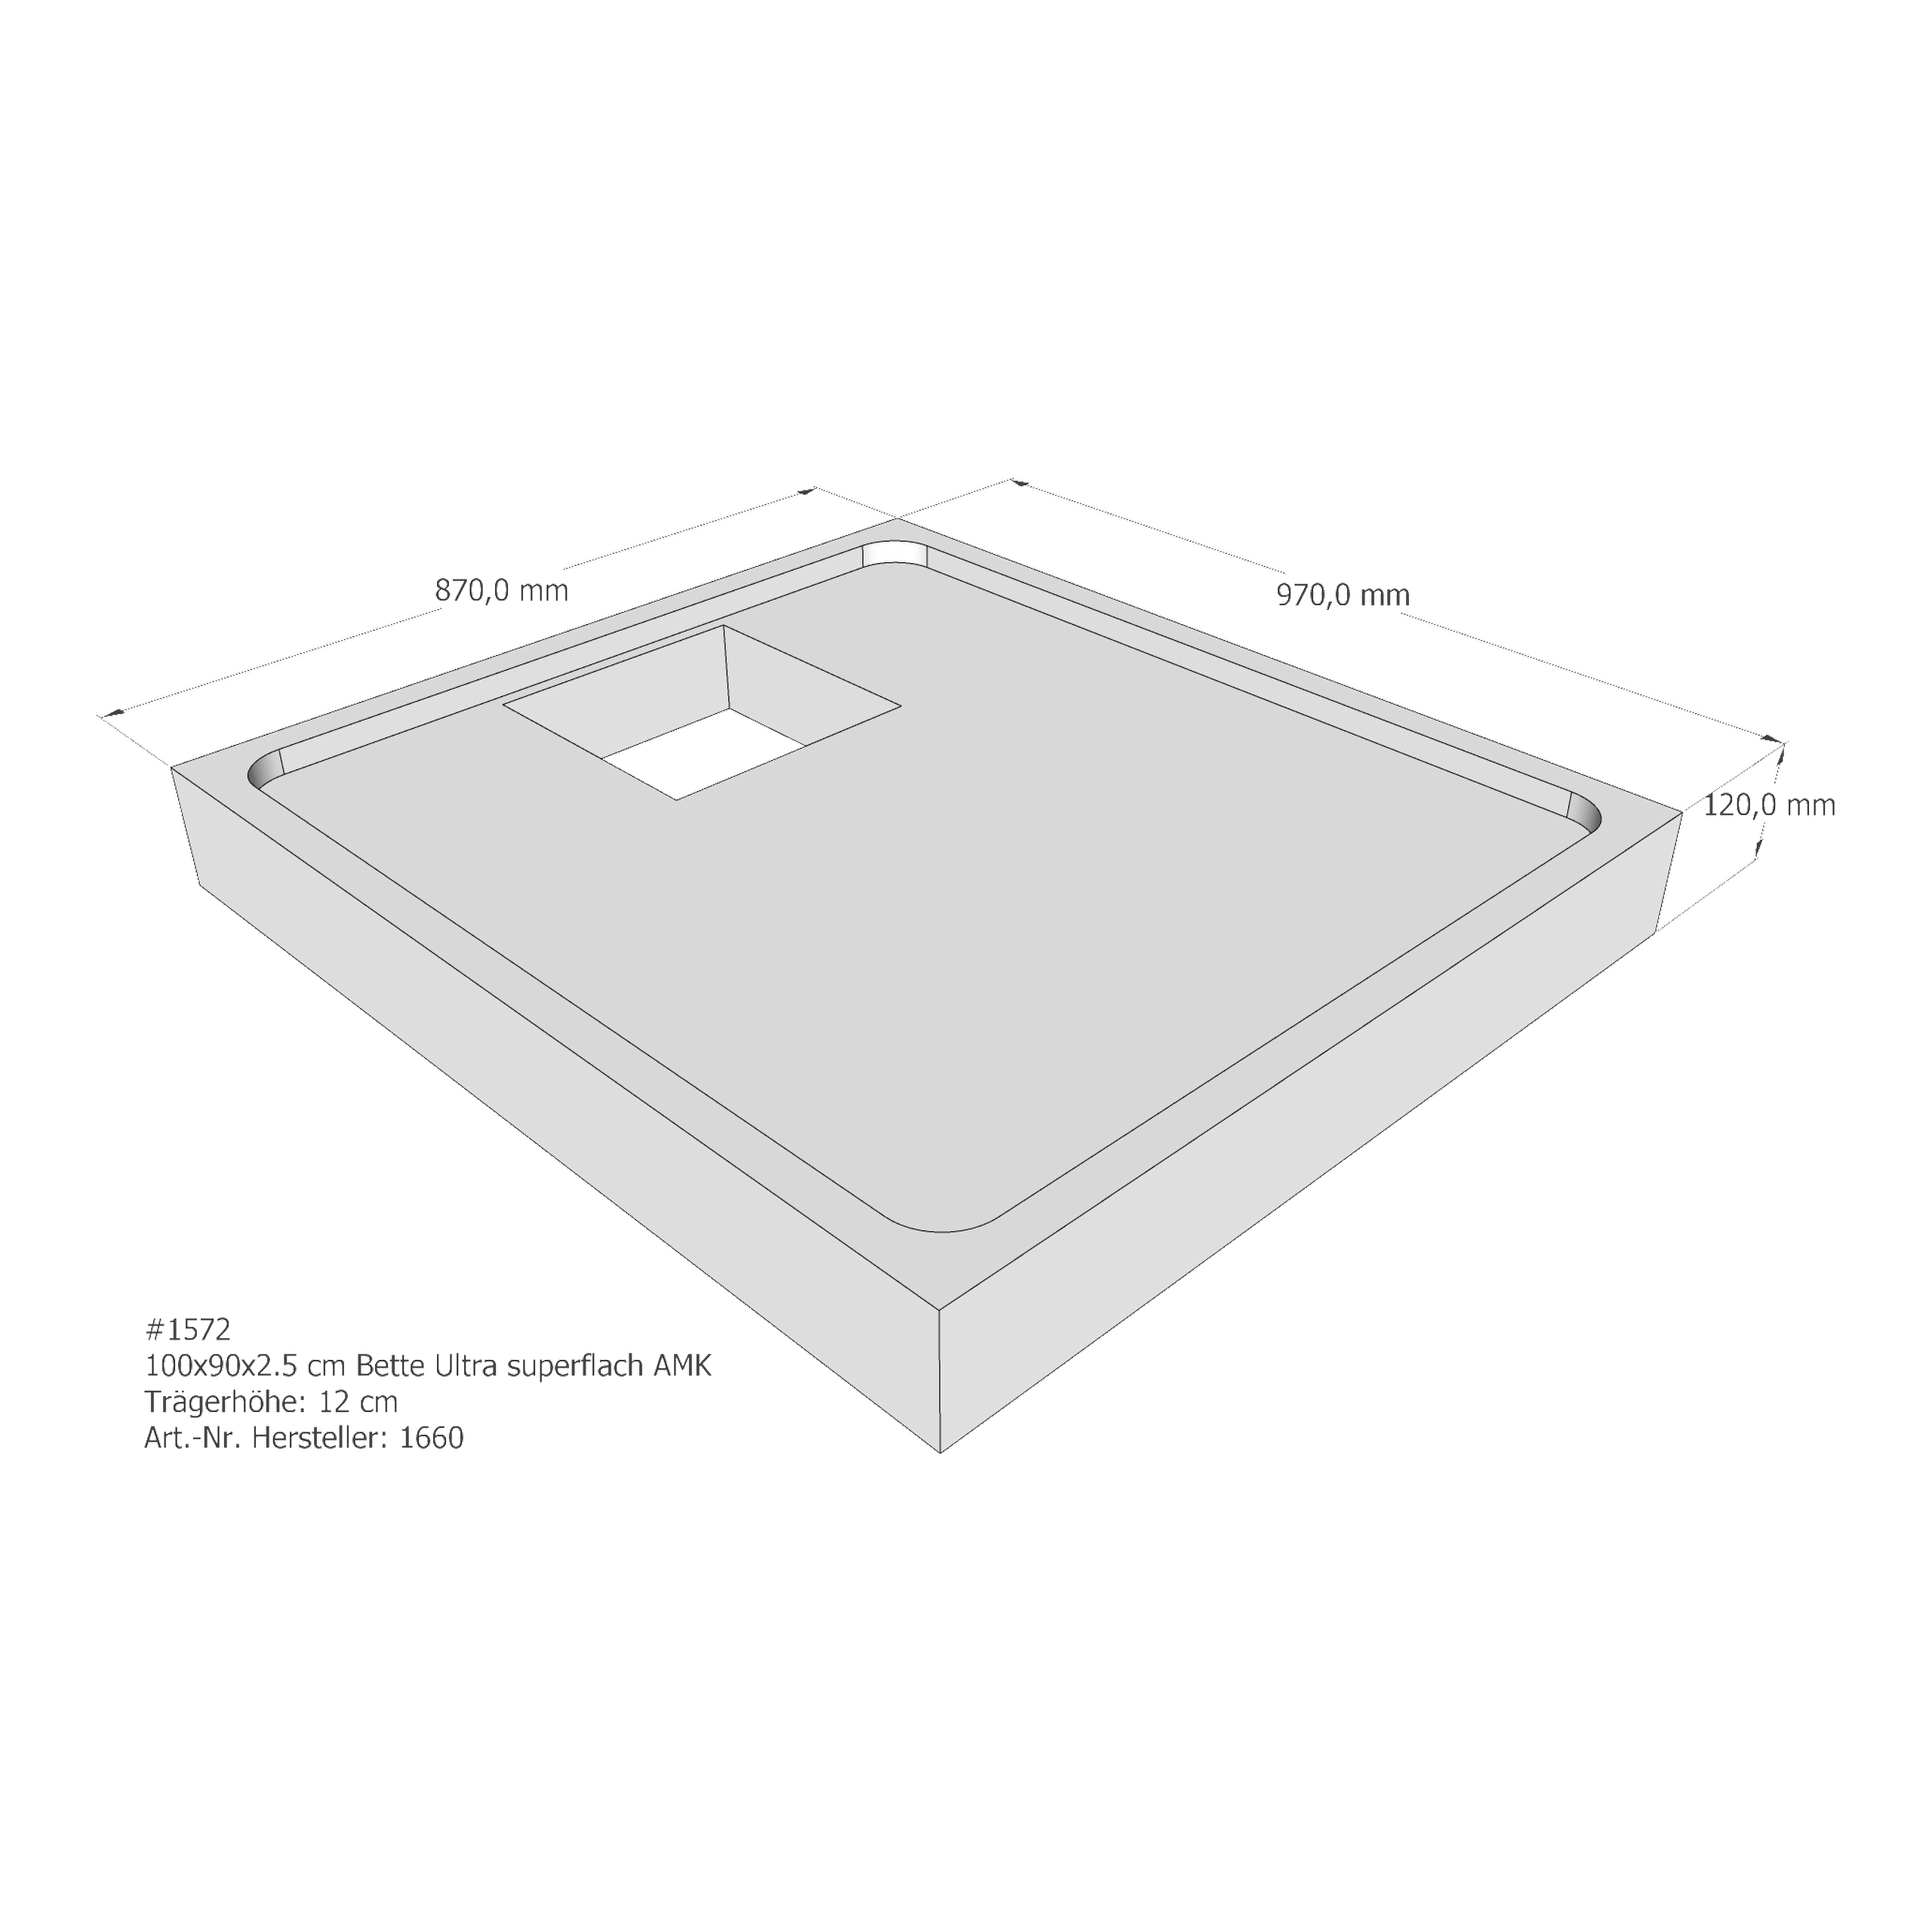 Duschwannenträger für Bette BetteUltra (superflach) 100 × 90 × 2,5 cm